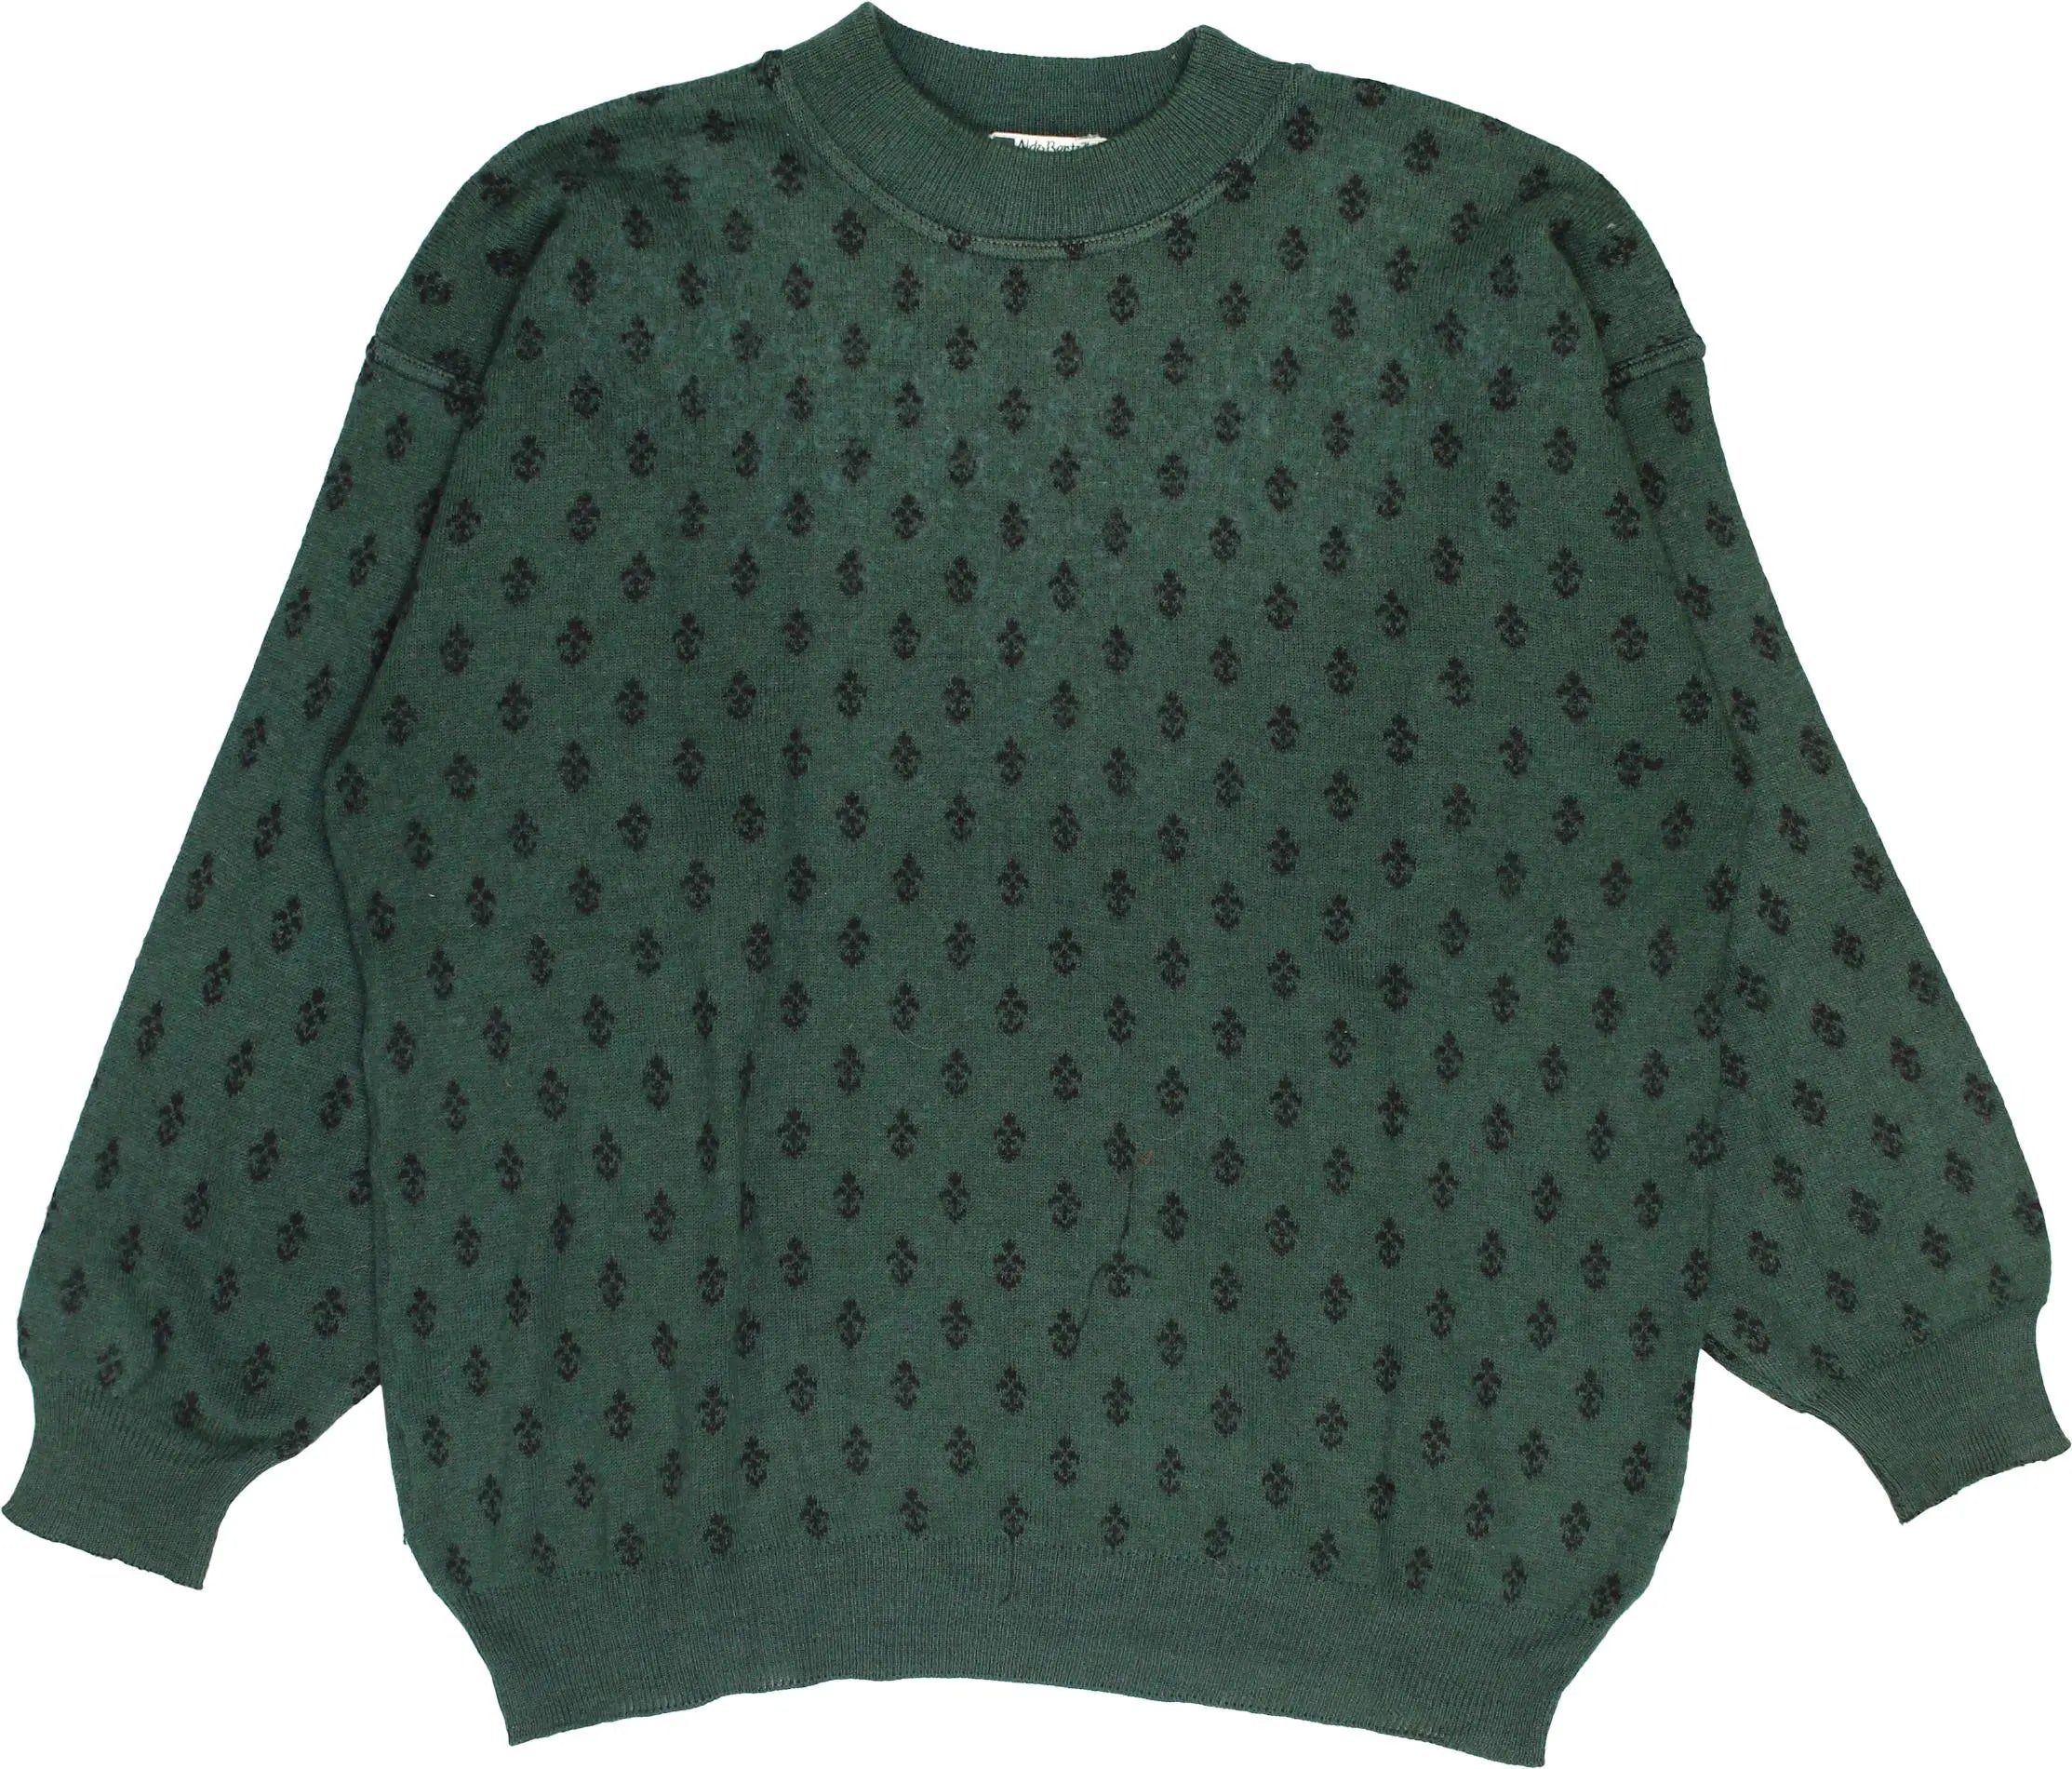 Aldo Bertolini - Green Patterned Jumper- ThriftTale.com - Vintage and second handclothing